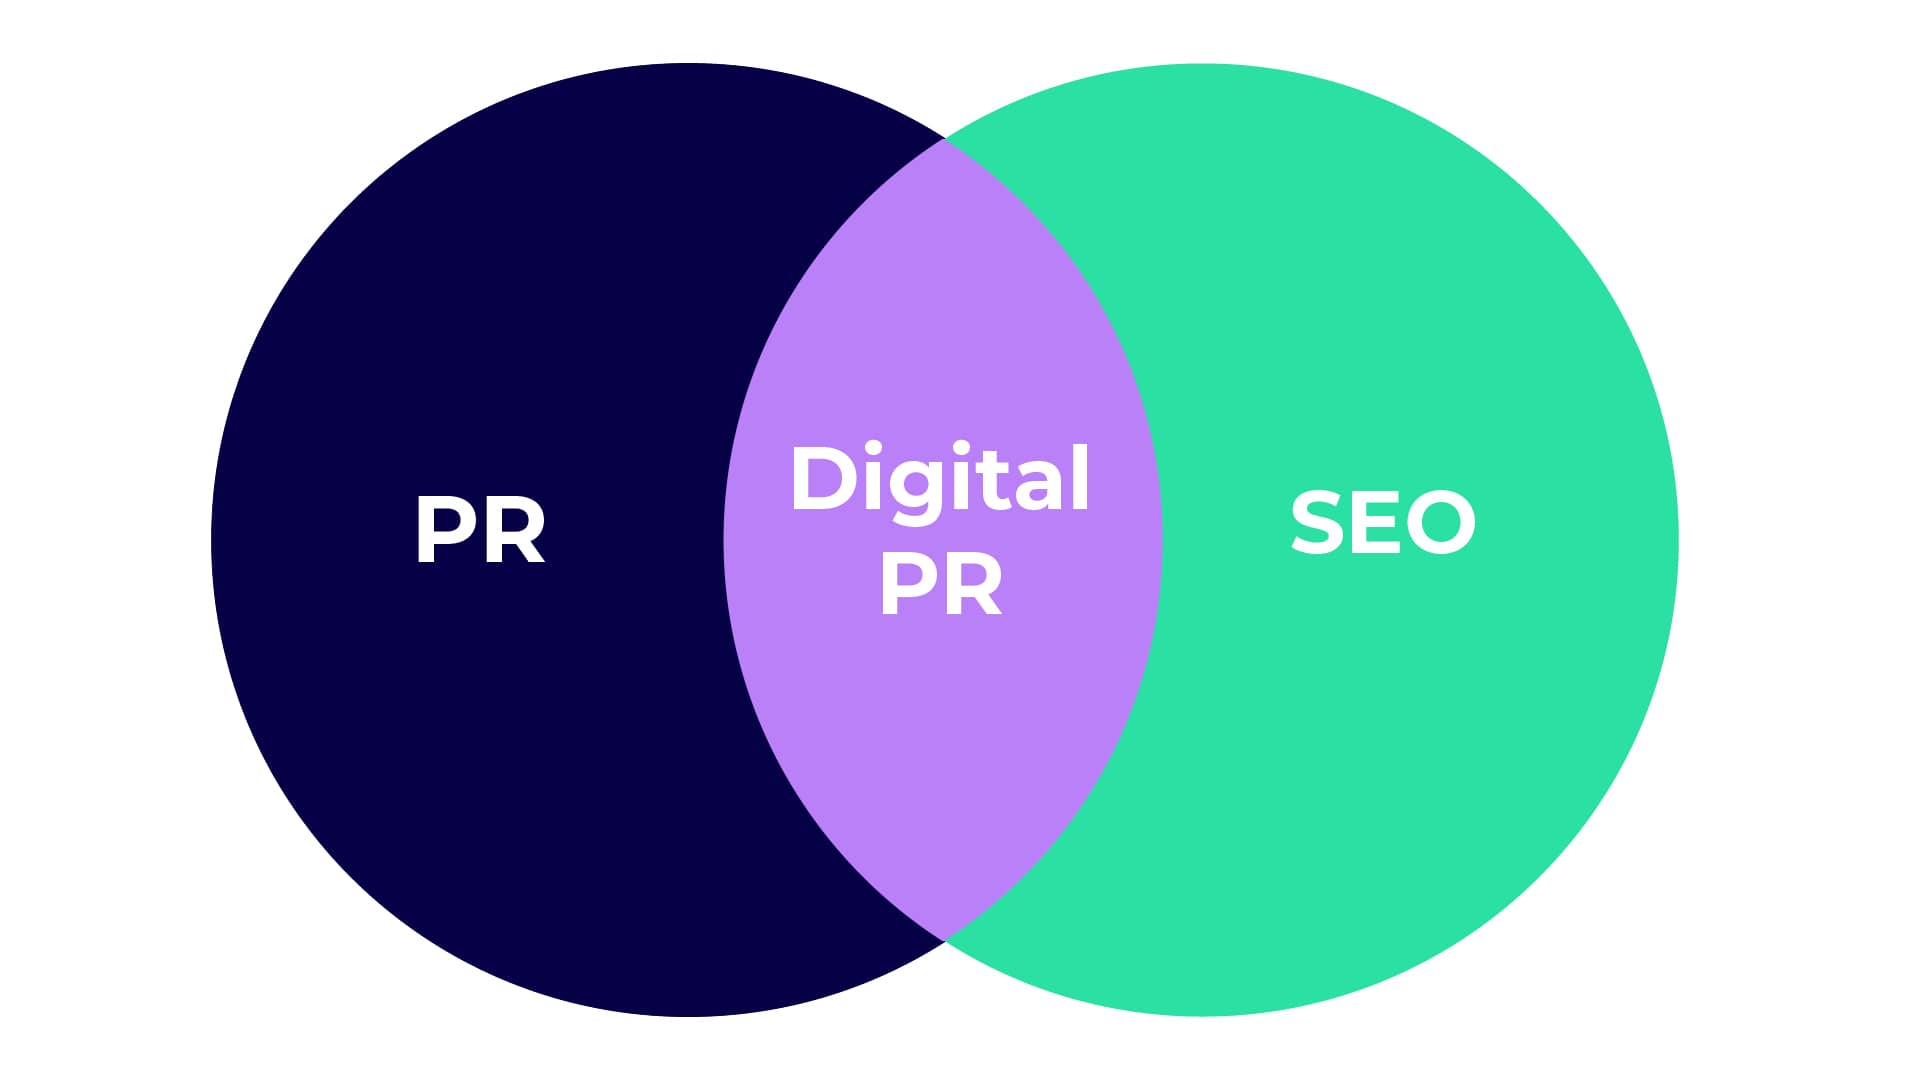 PR + SEO = Digital PR